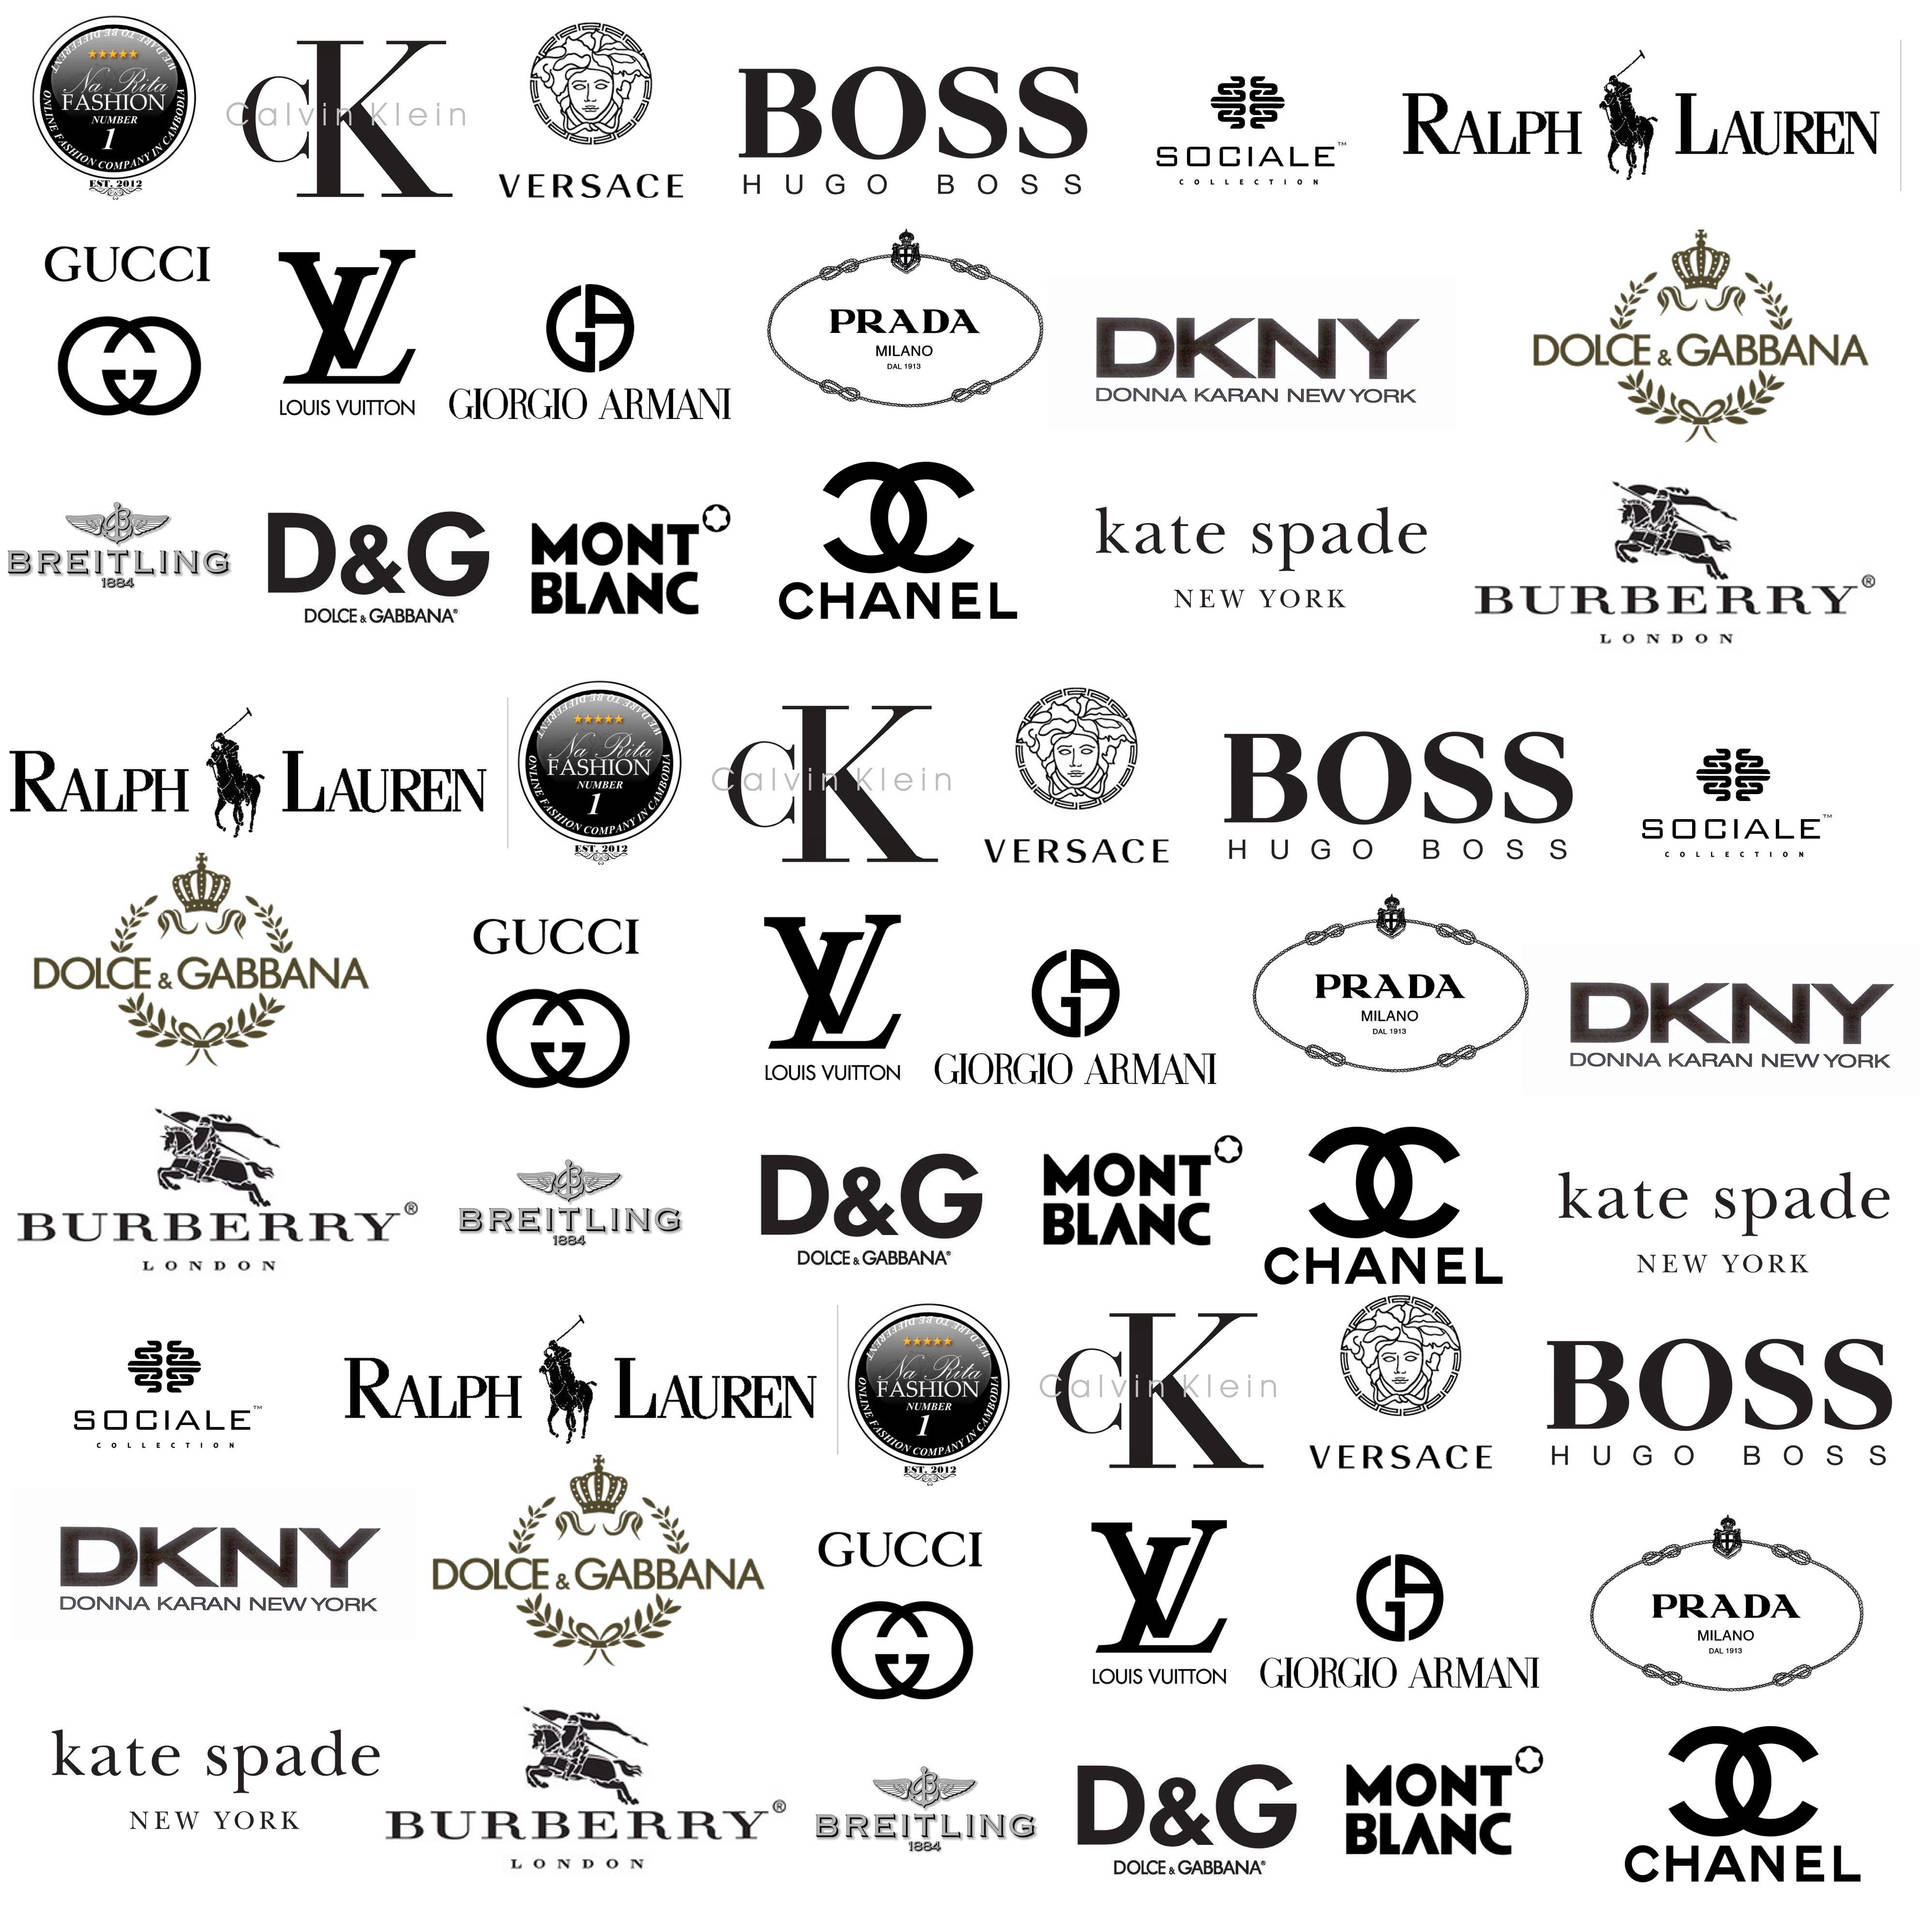 All Fashion Brand Logos collage wallpaper.